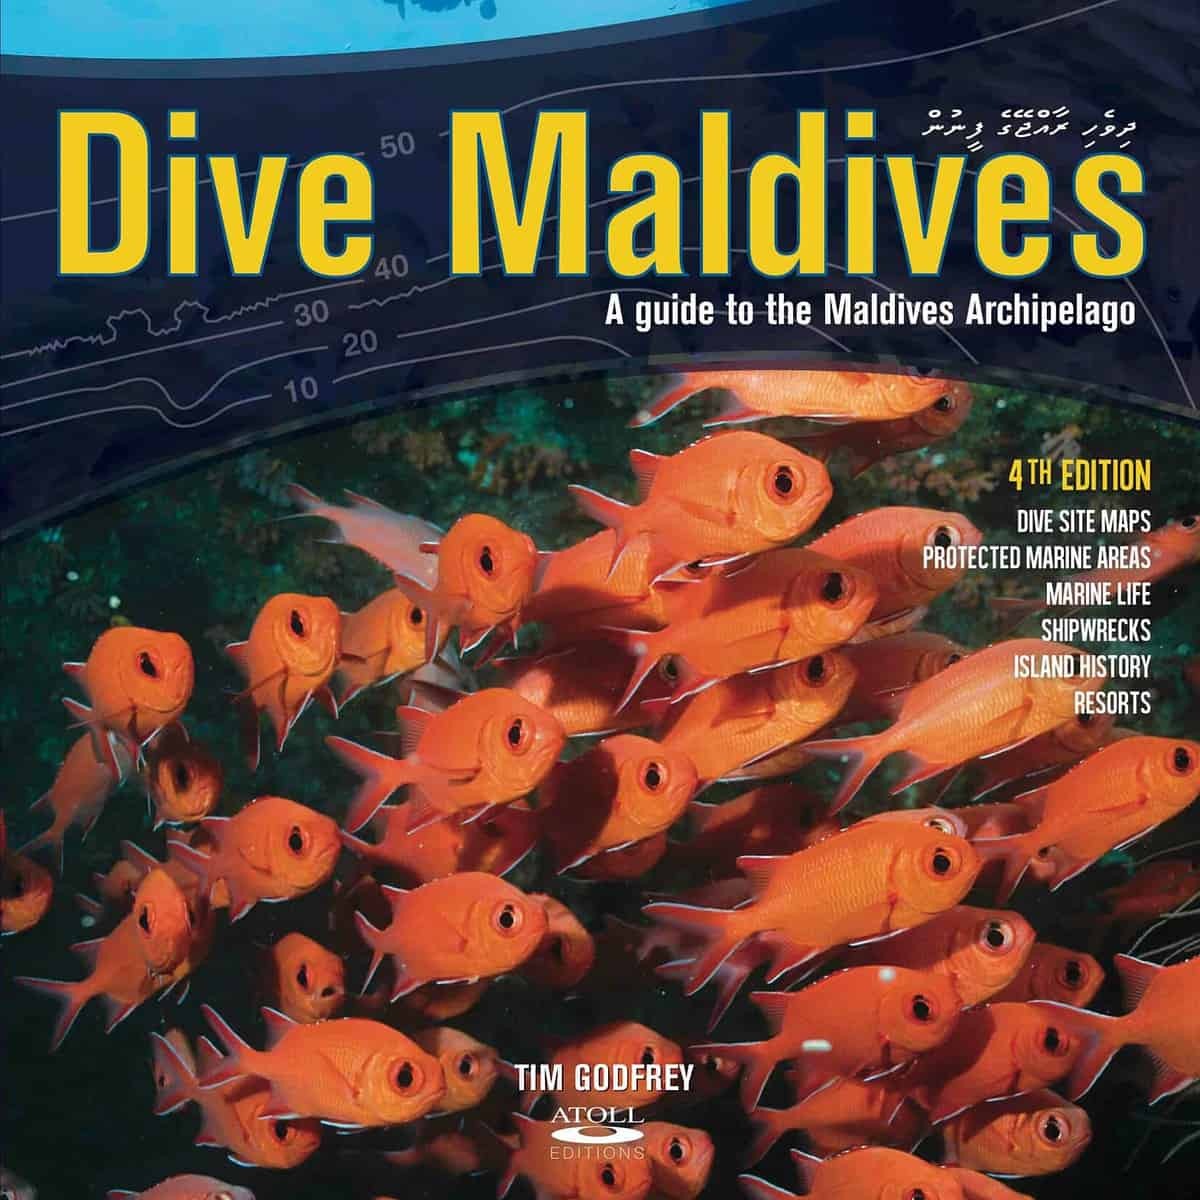 'Dive Maldives' by Tim Godfrey